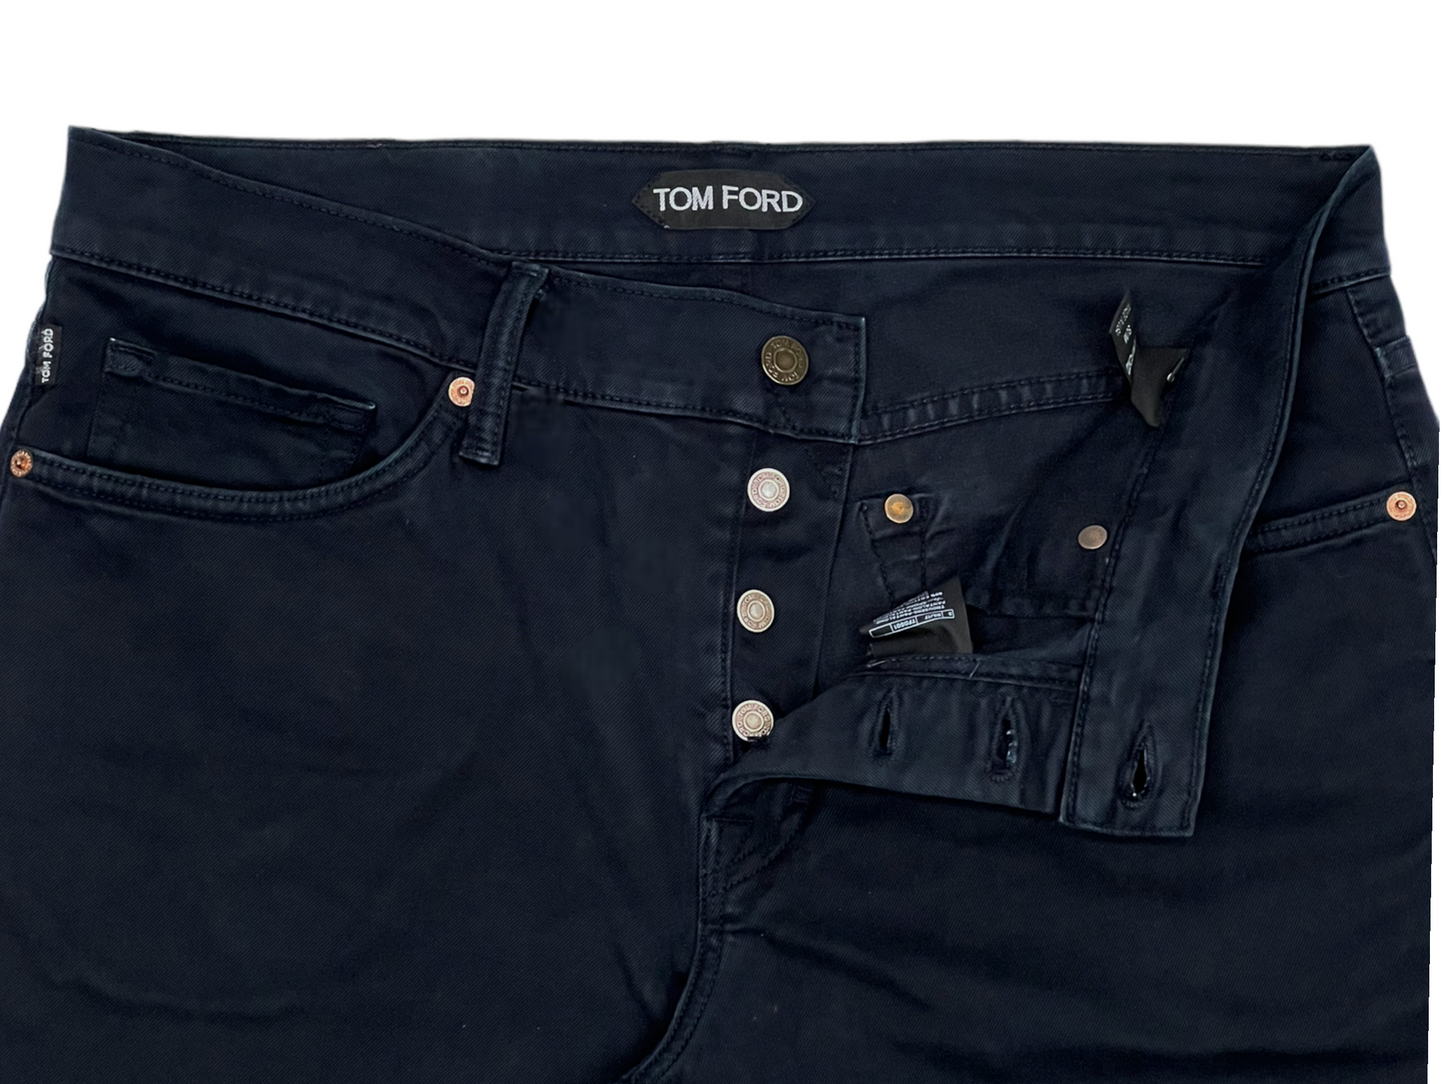 Tom Ford Dark Indigo Casual Pants 33W